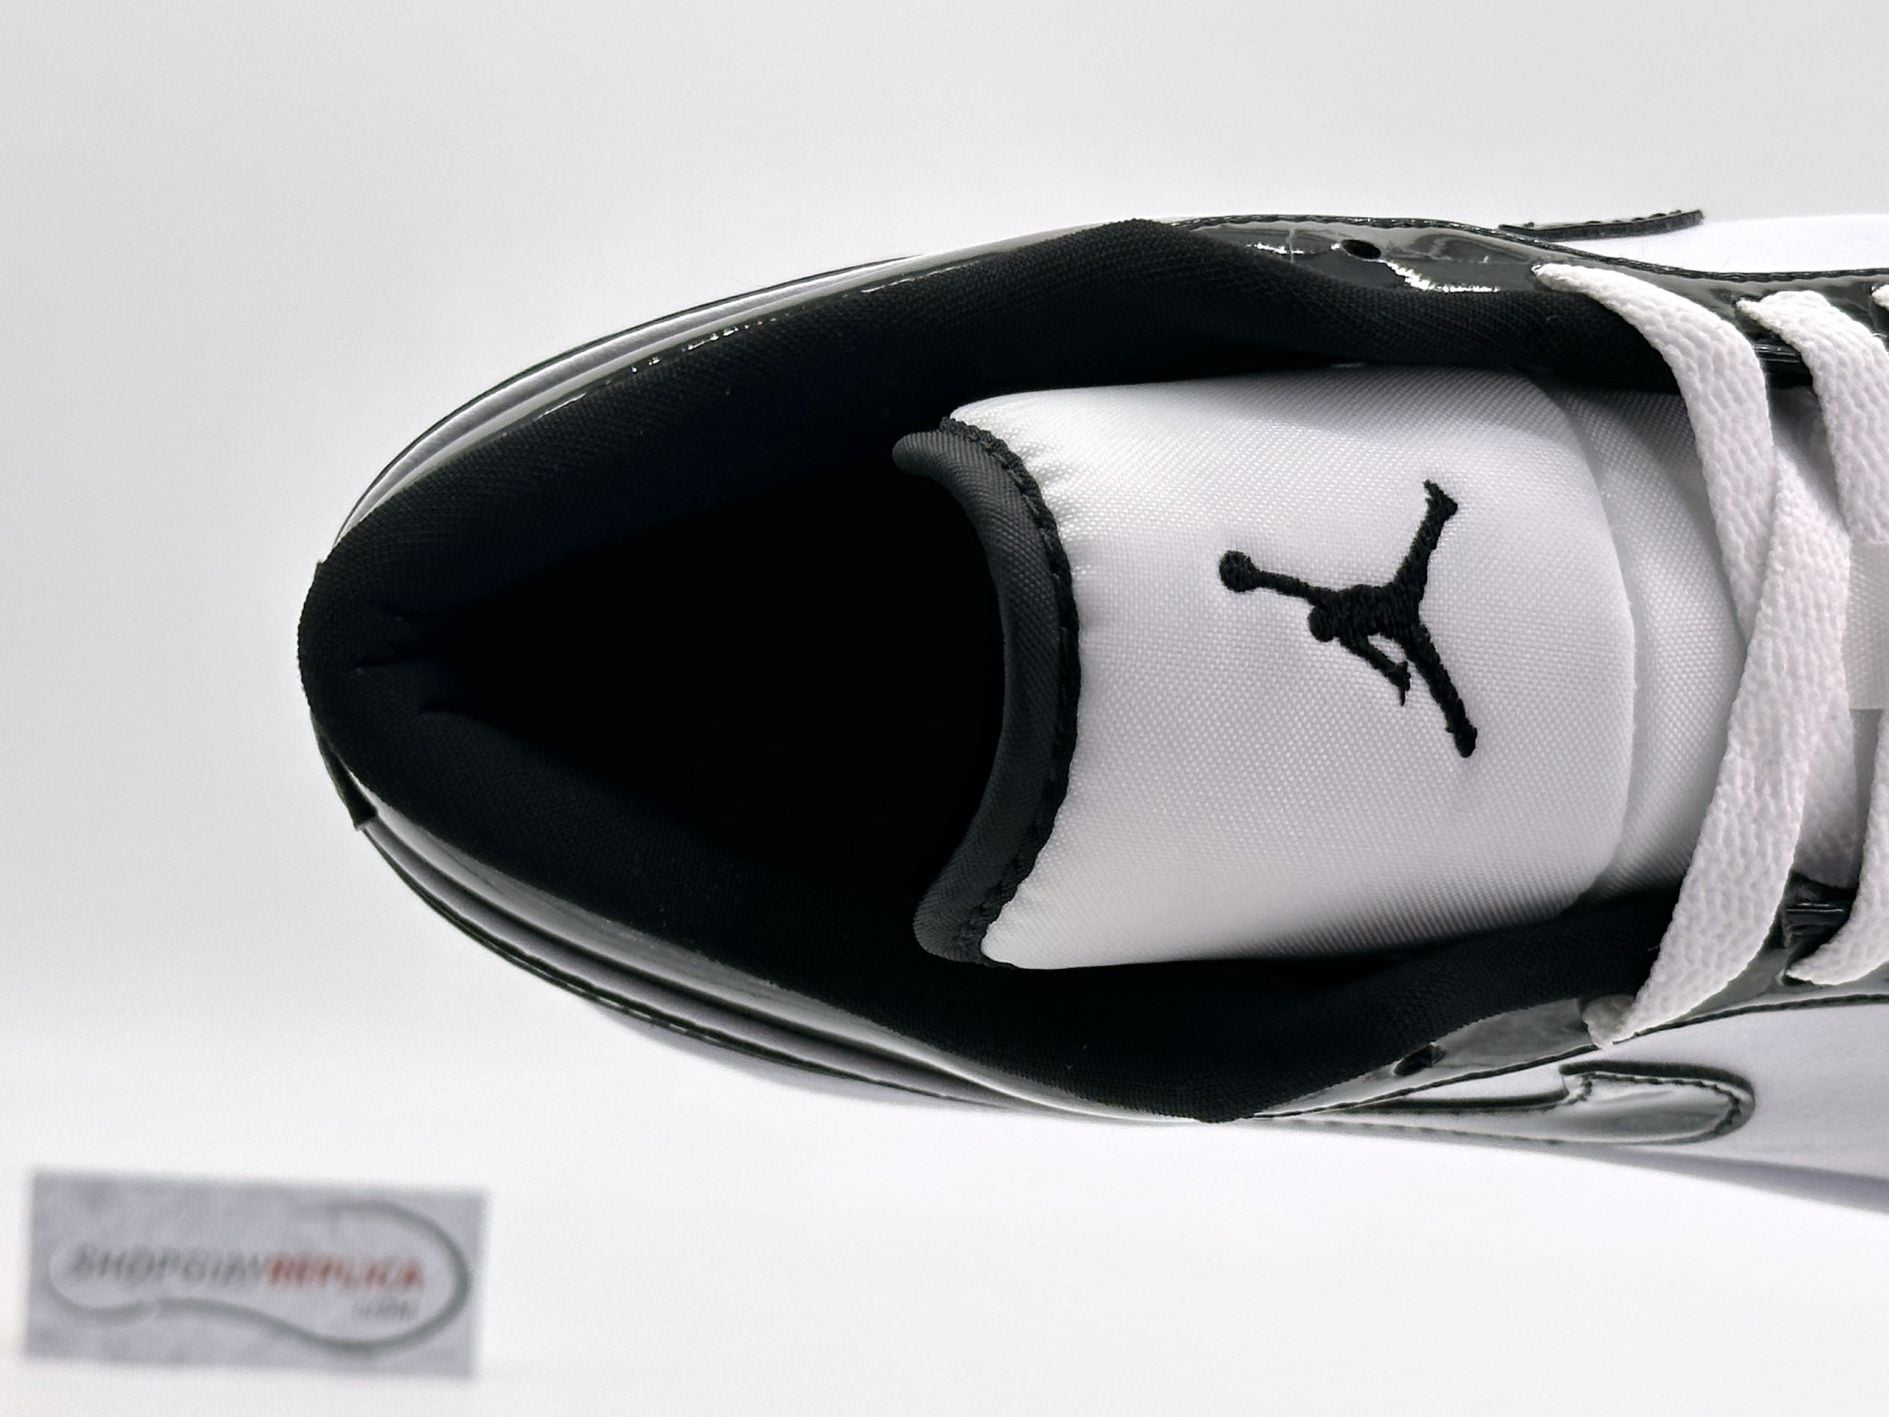 Giày Nike Air Jordan 1 Low SE ‘Concord’ Like Auth